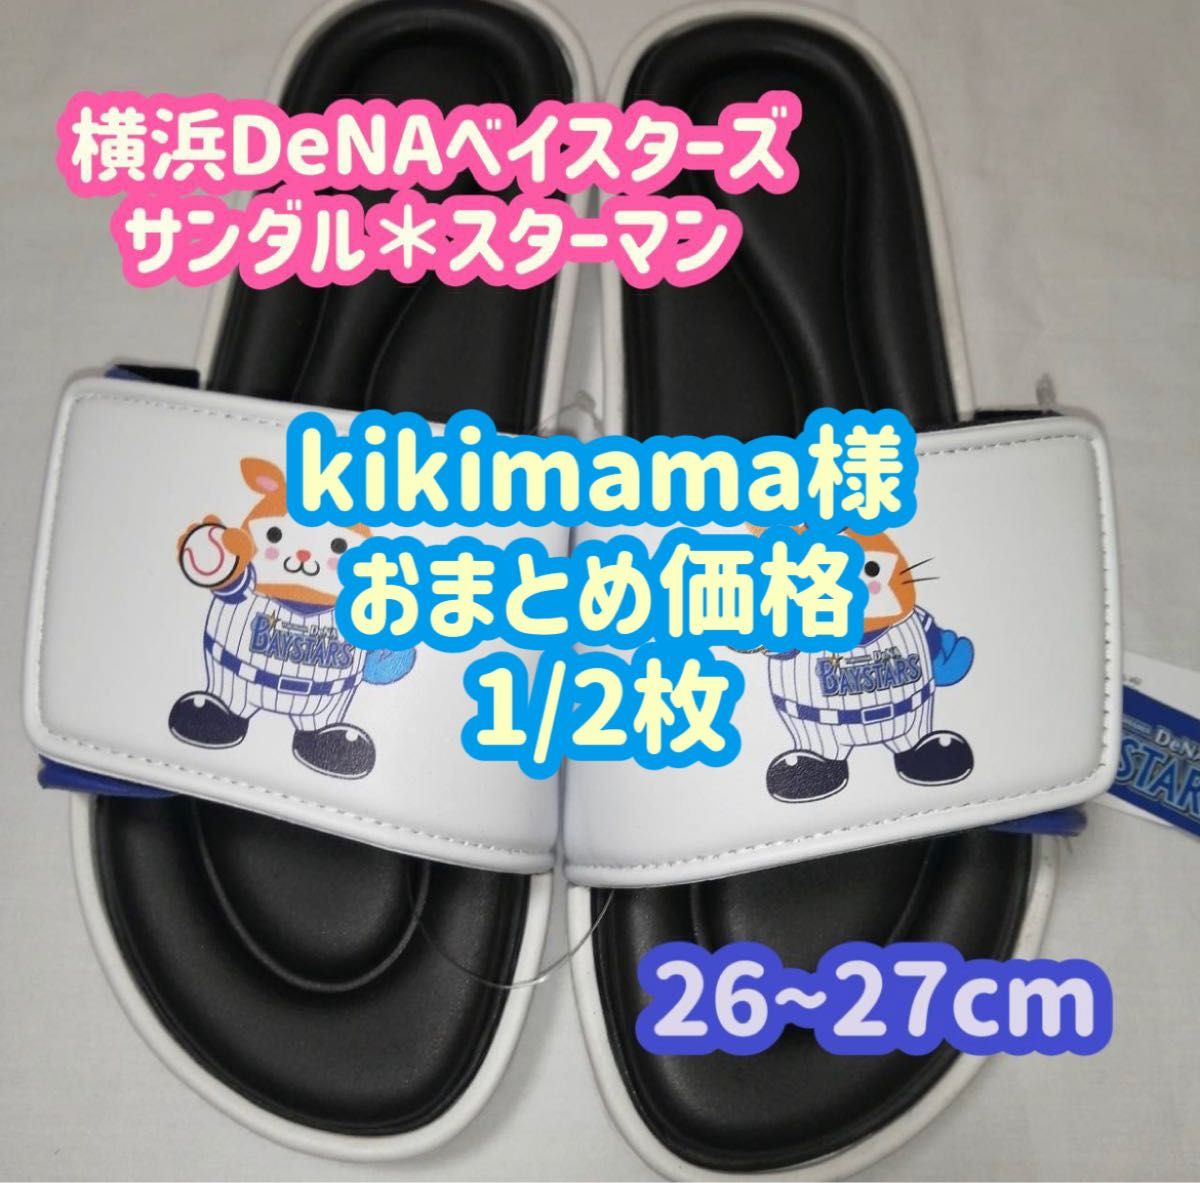 kikimama様専用】横浜DeNAベイスターズ スターマン メンズ サンダル